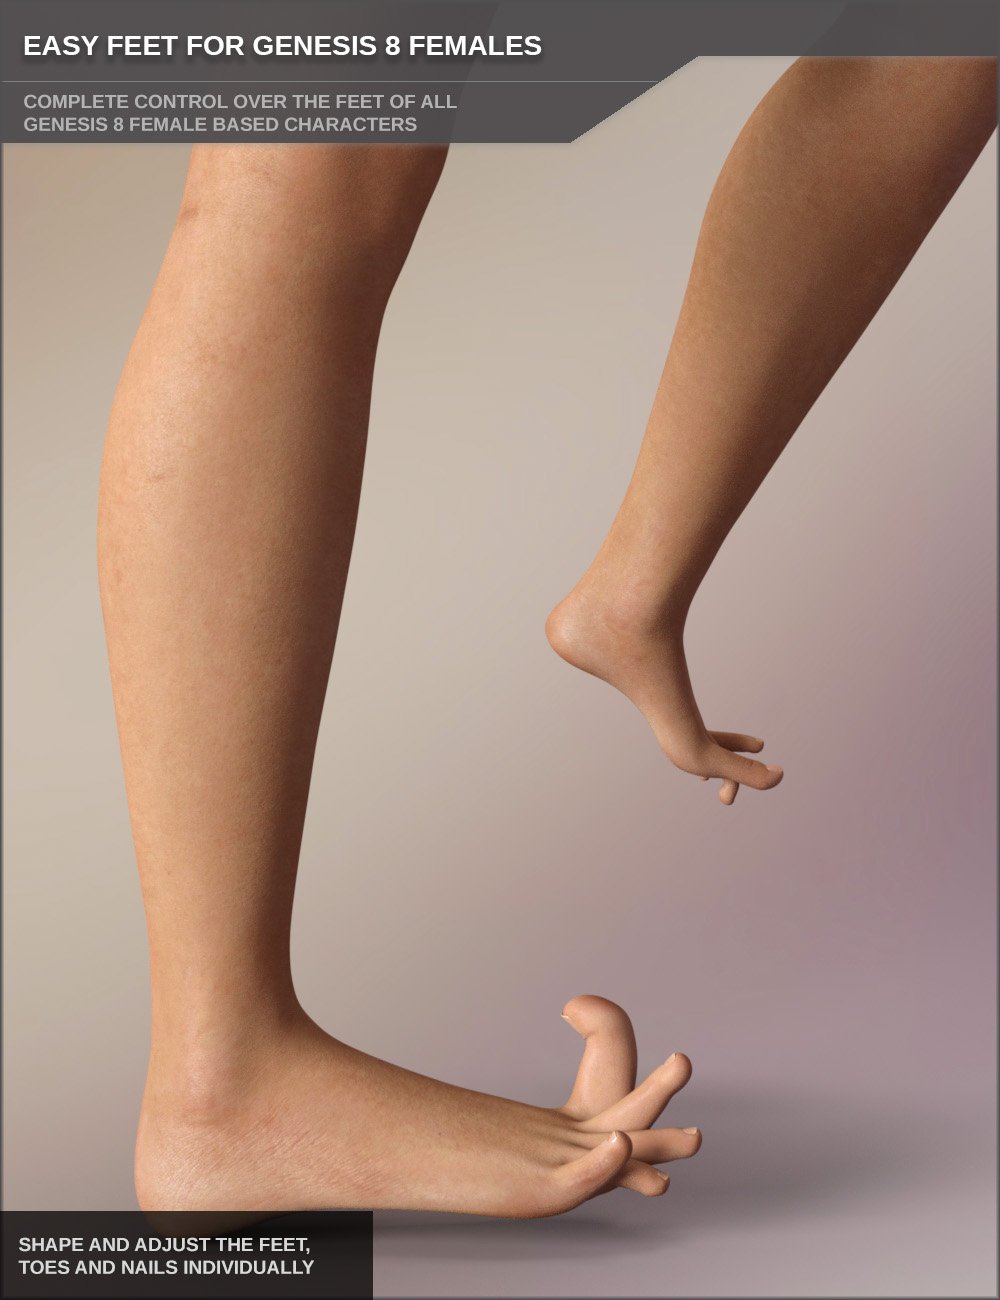 Easy Feet for Genesis 8 Female(s) by: SF-Design, 3D Models by Daz 3D